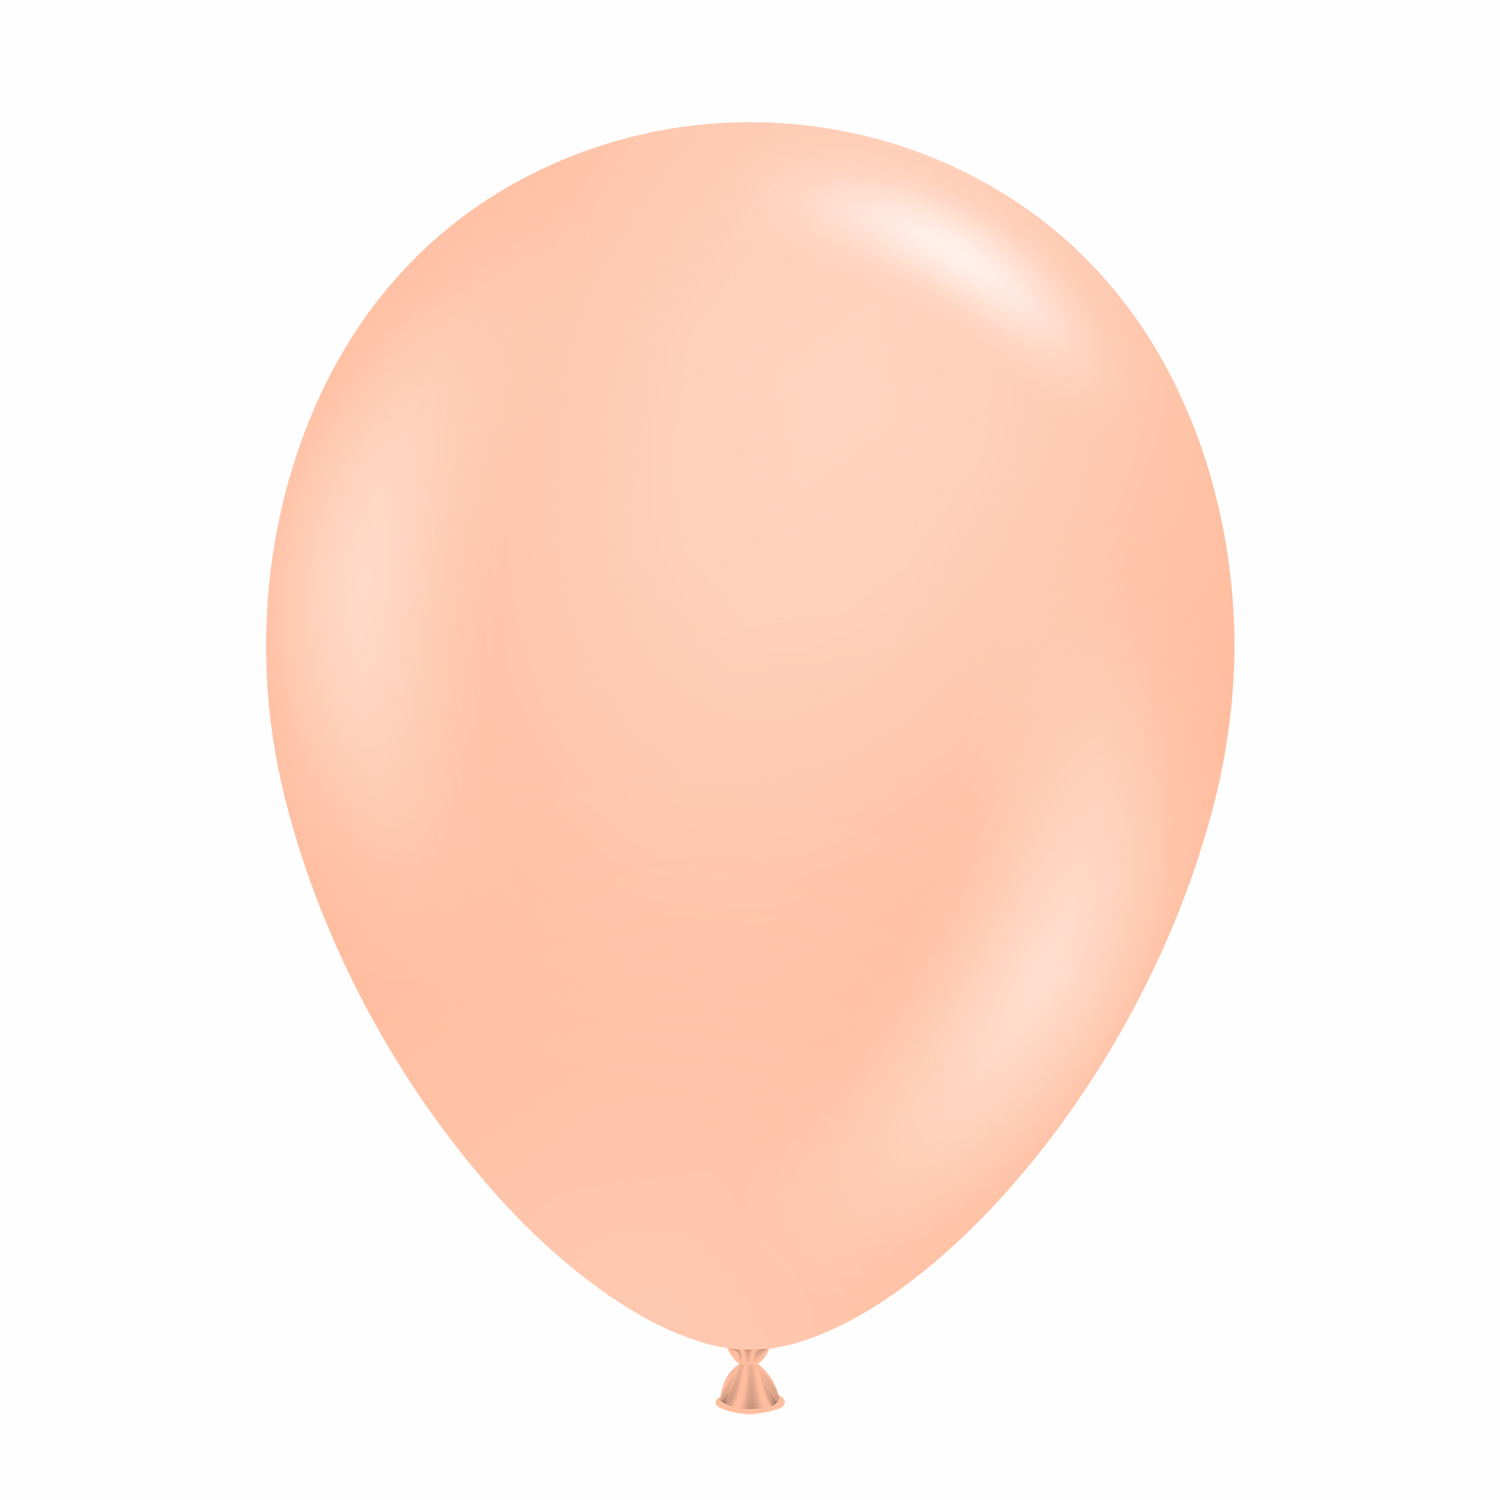 Cheeky Latex Balloons